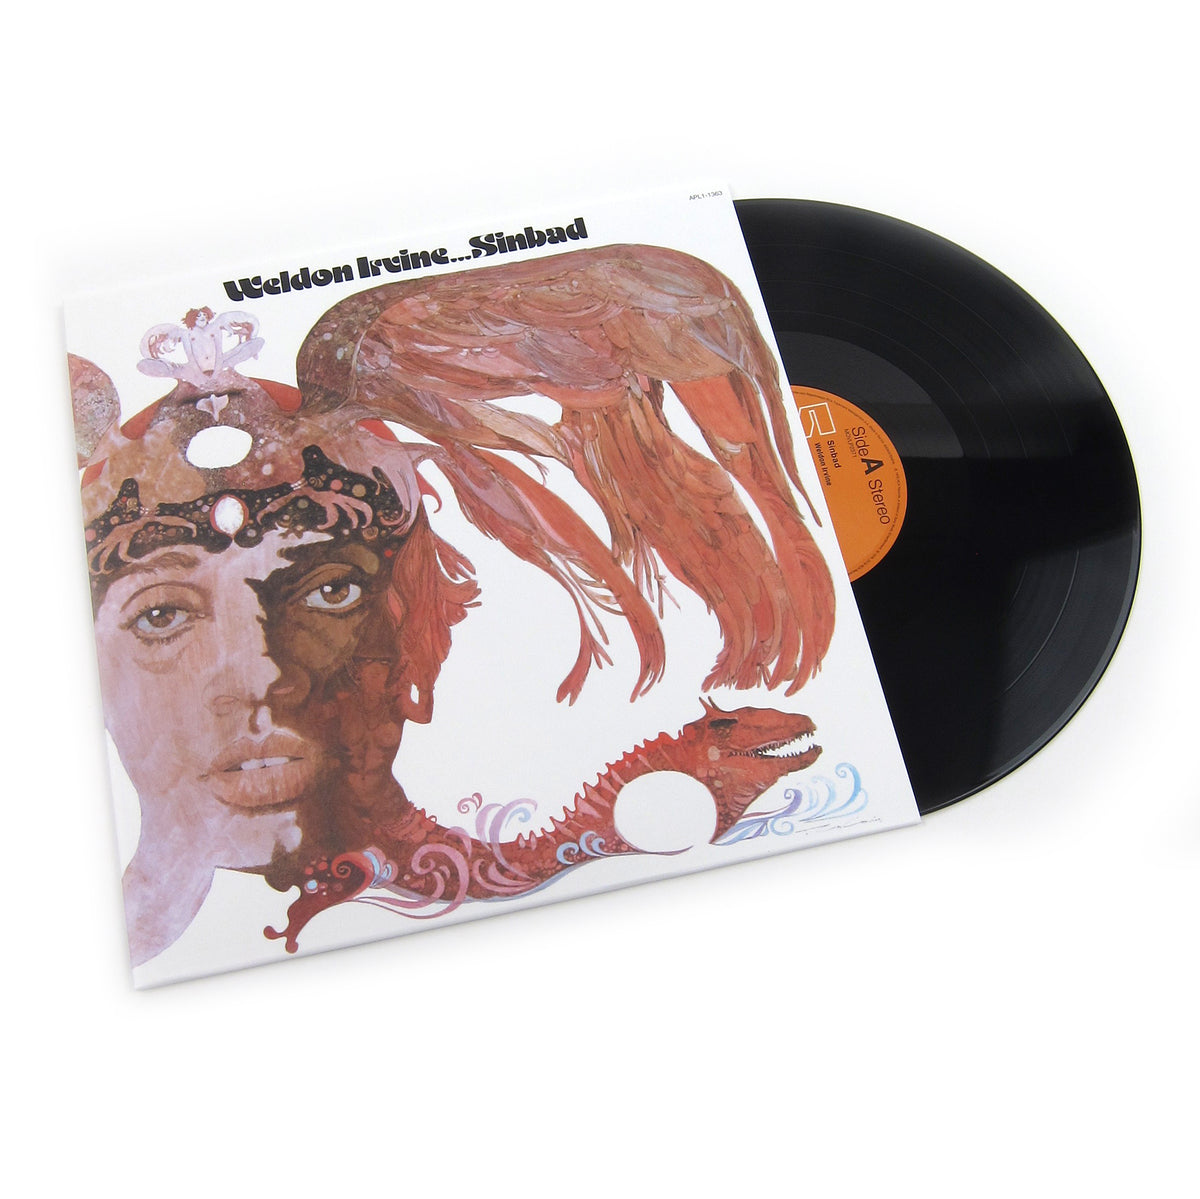 Weldon Irvine: Sinbad (Music On Vinyl 180g) Vinyl LP – TurntableLab.com